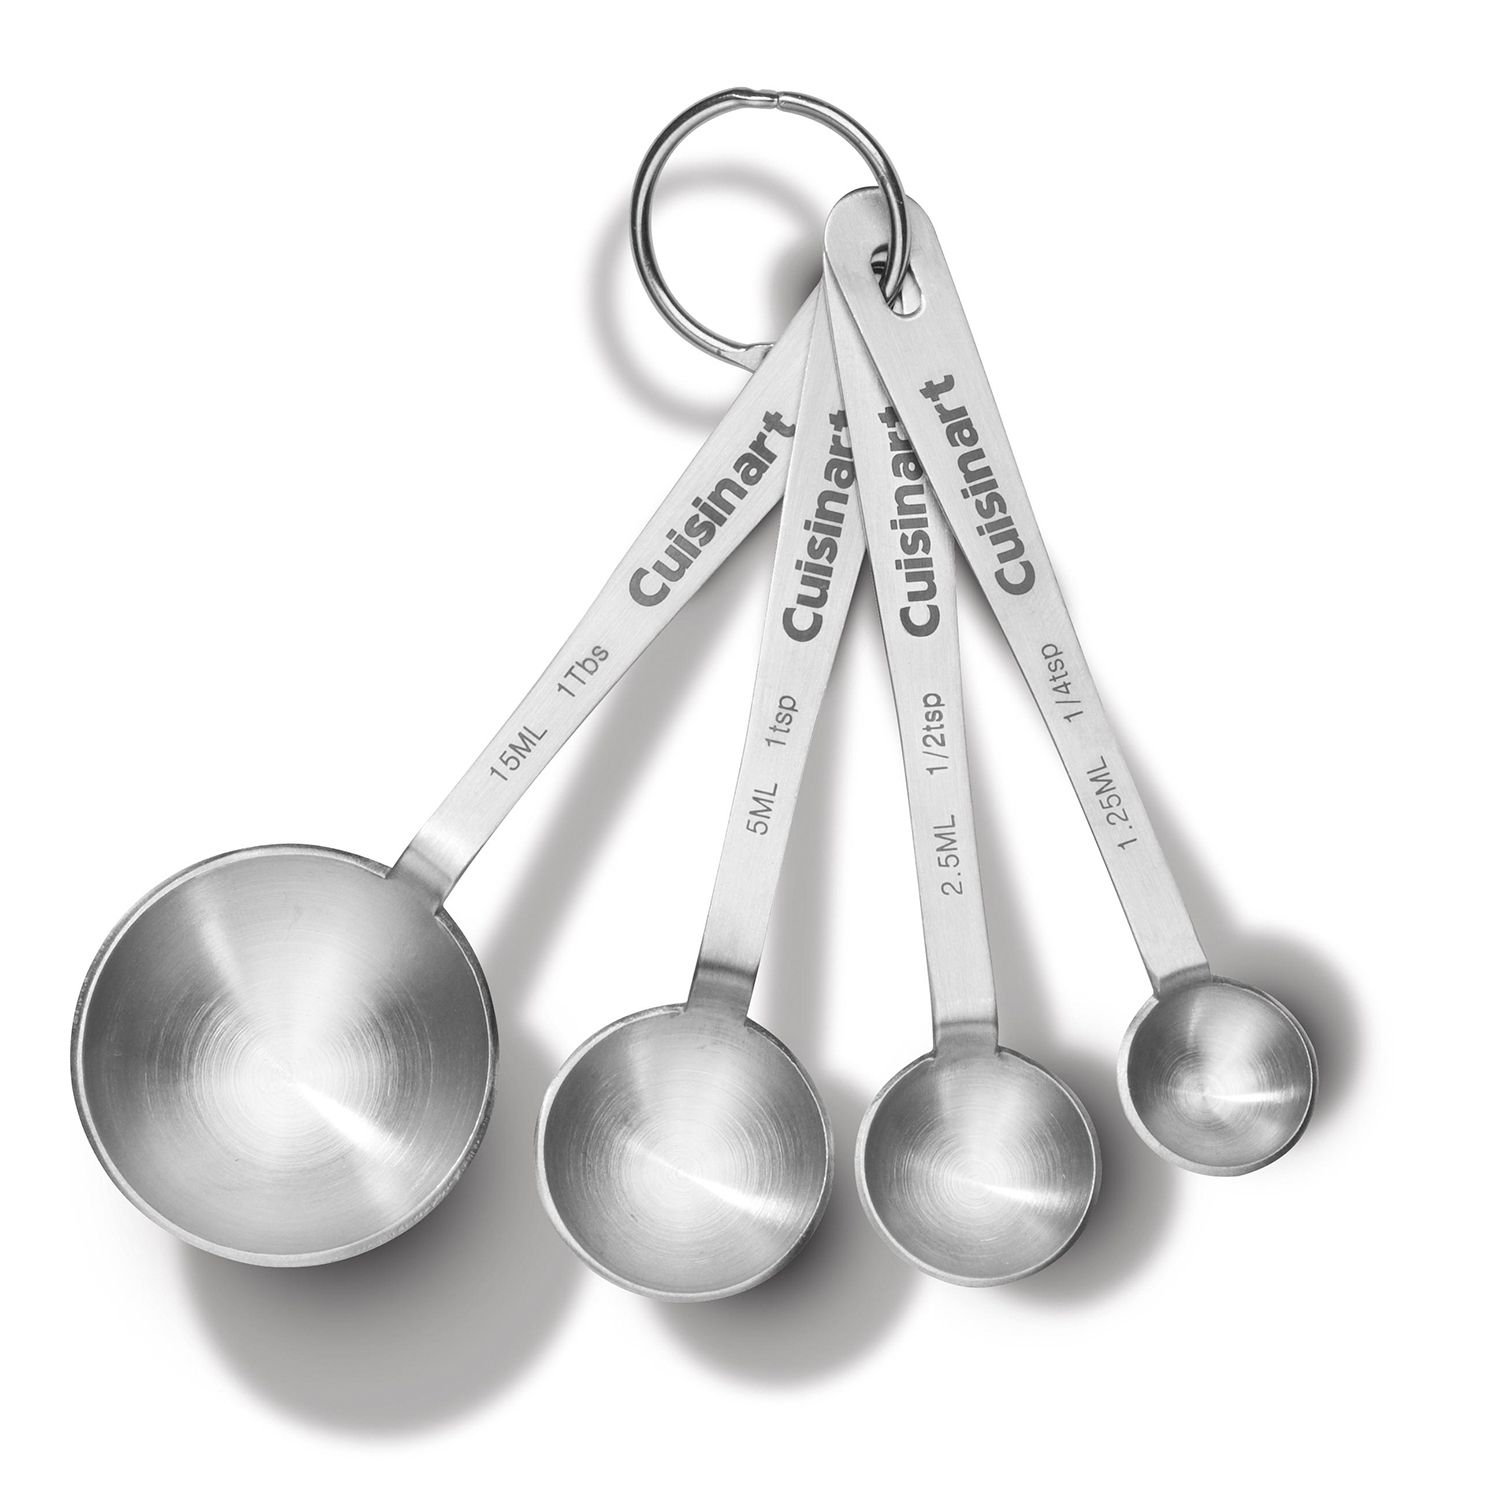 Chef Pomodoro Measuring Spoons 7-Piece Set, Stainless Steel Metal